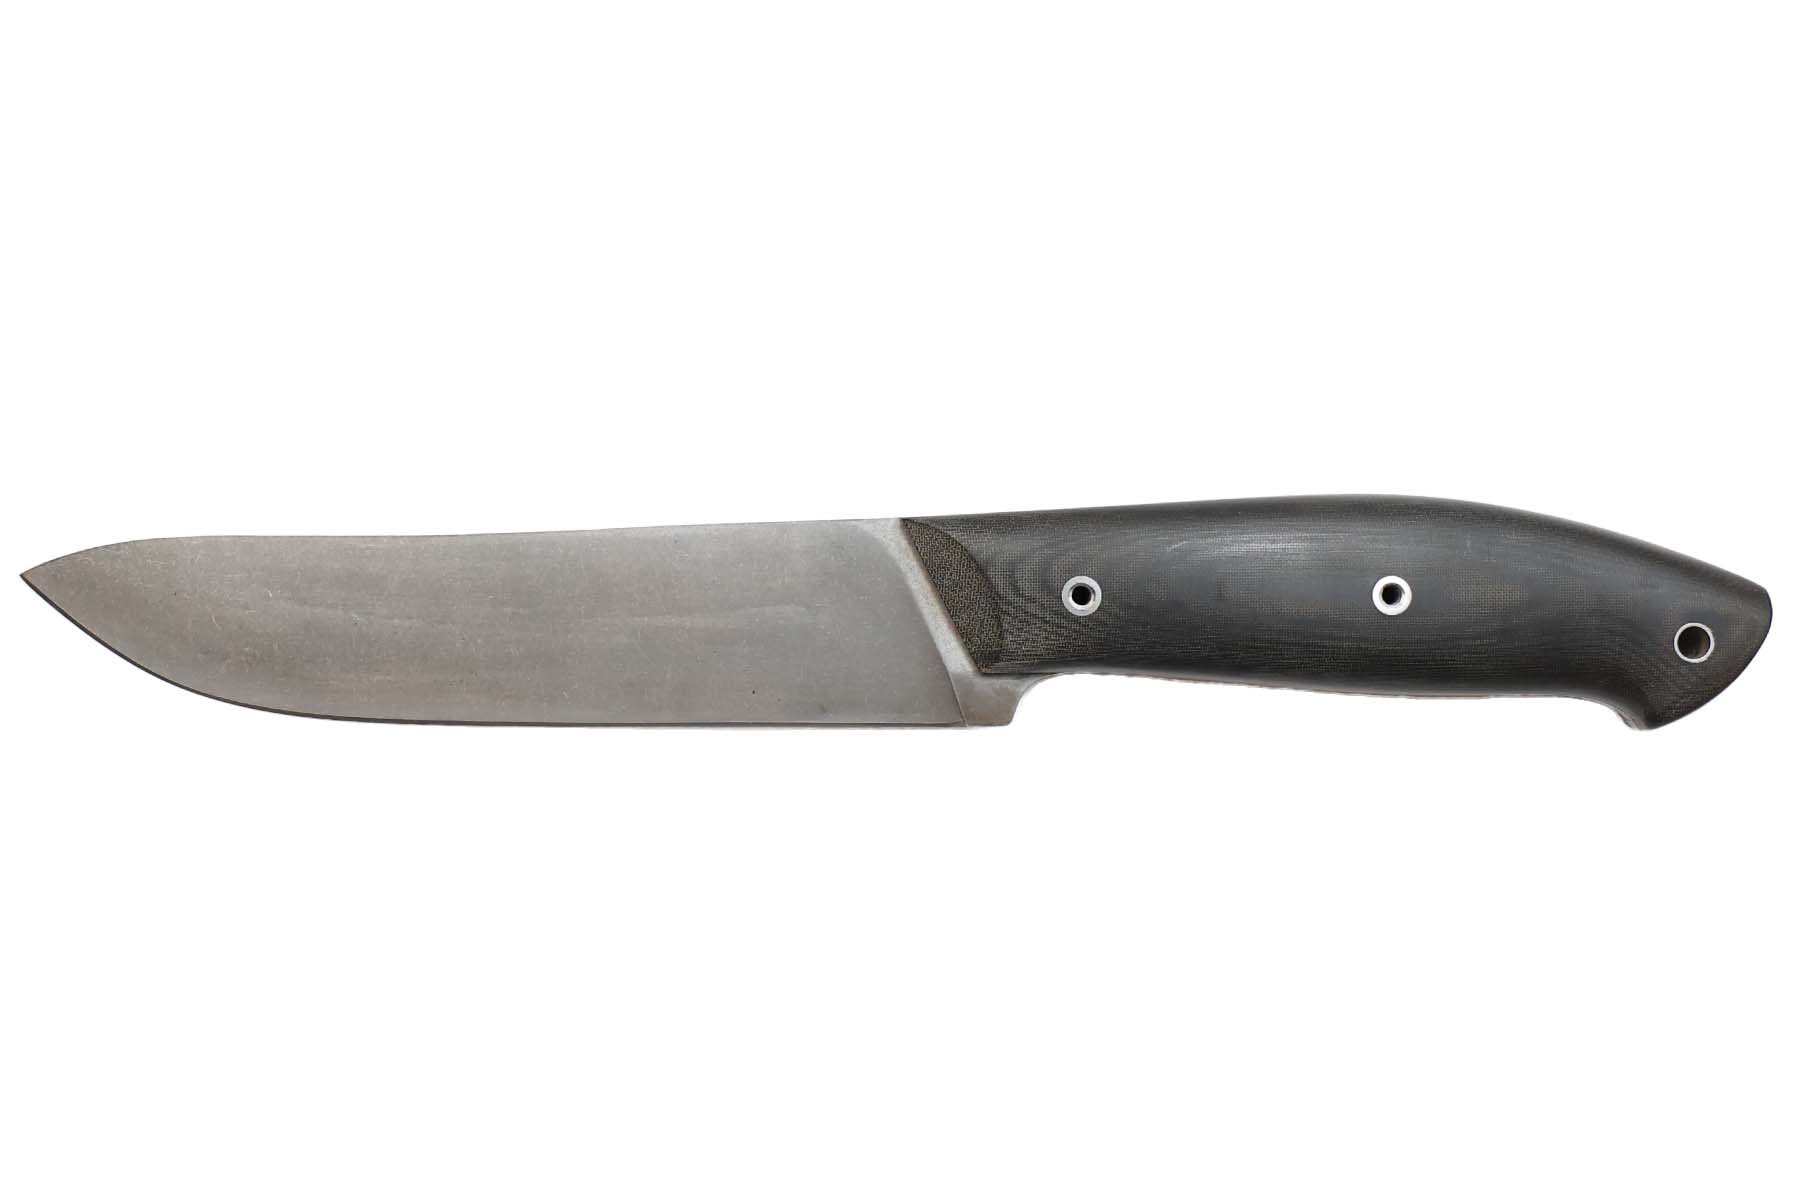 Couteau fixe plate semelle artisanal "Lart-knives" manche micarta